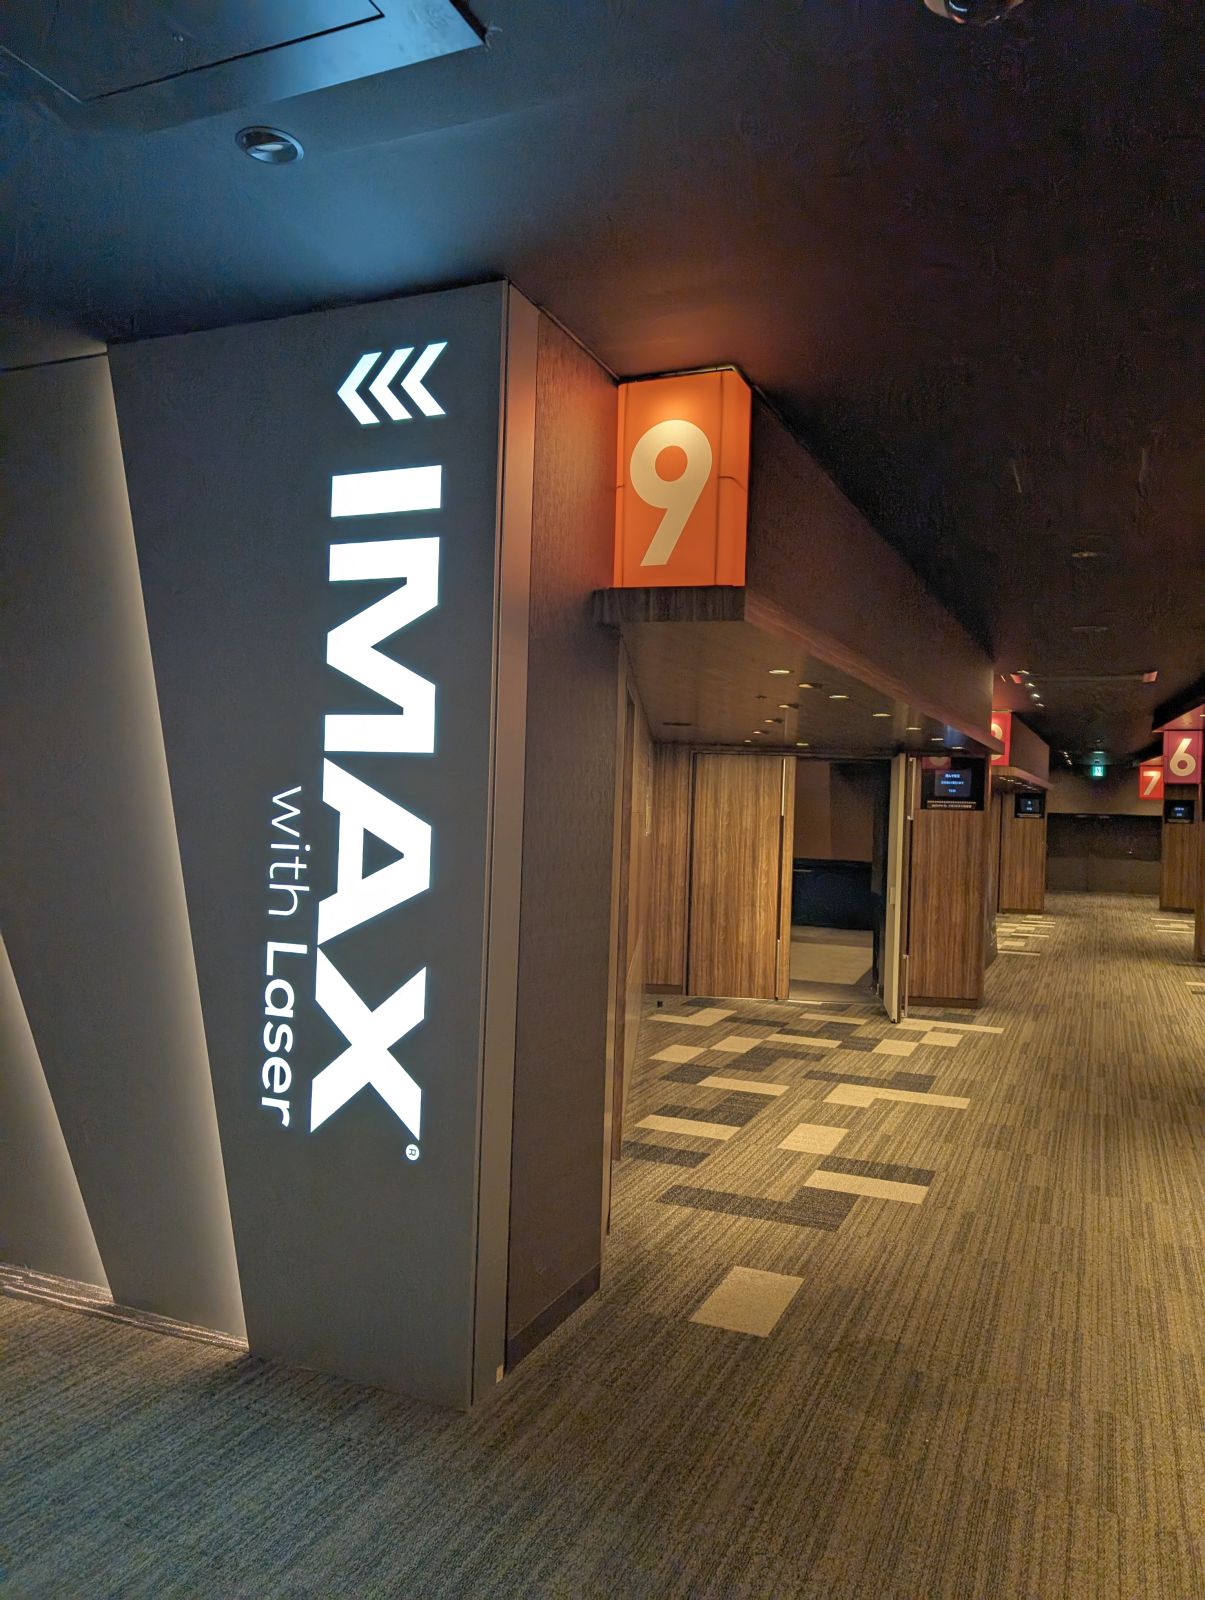 IMAXシアター